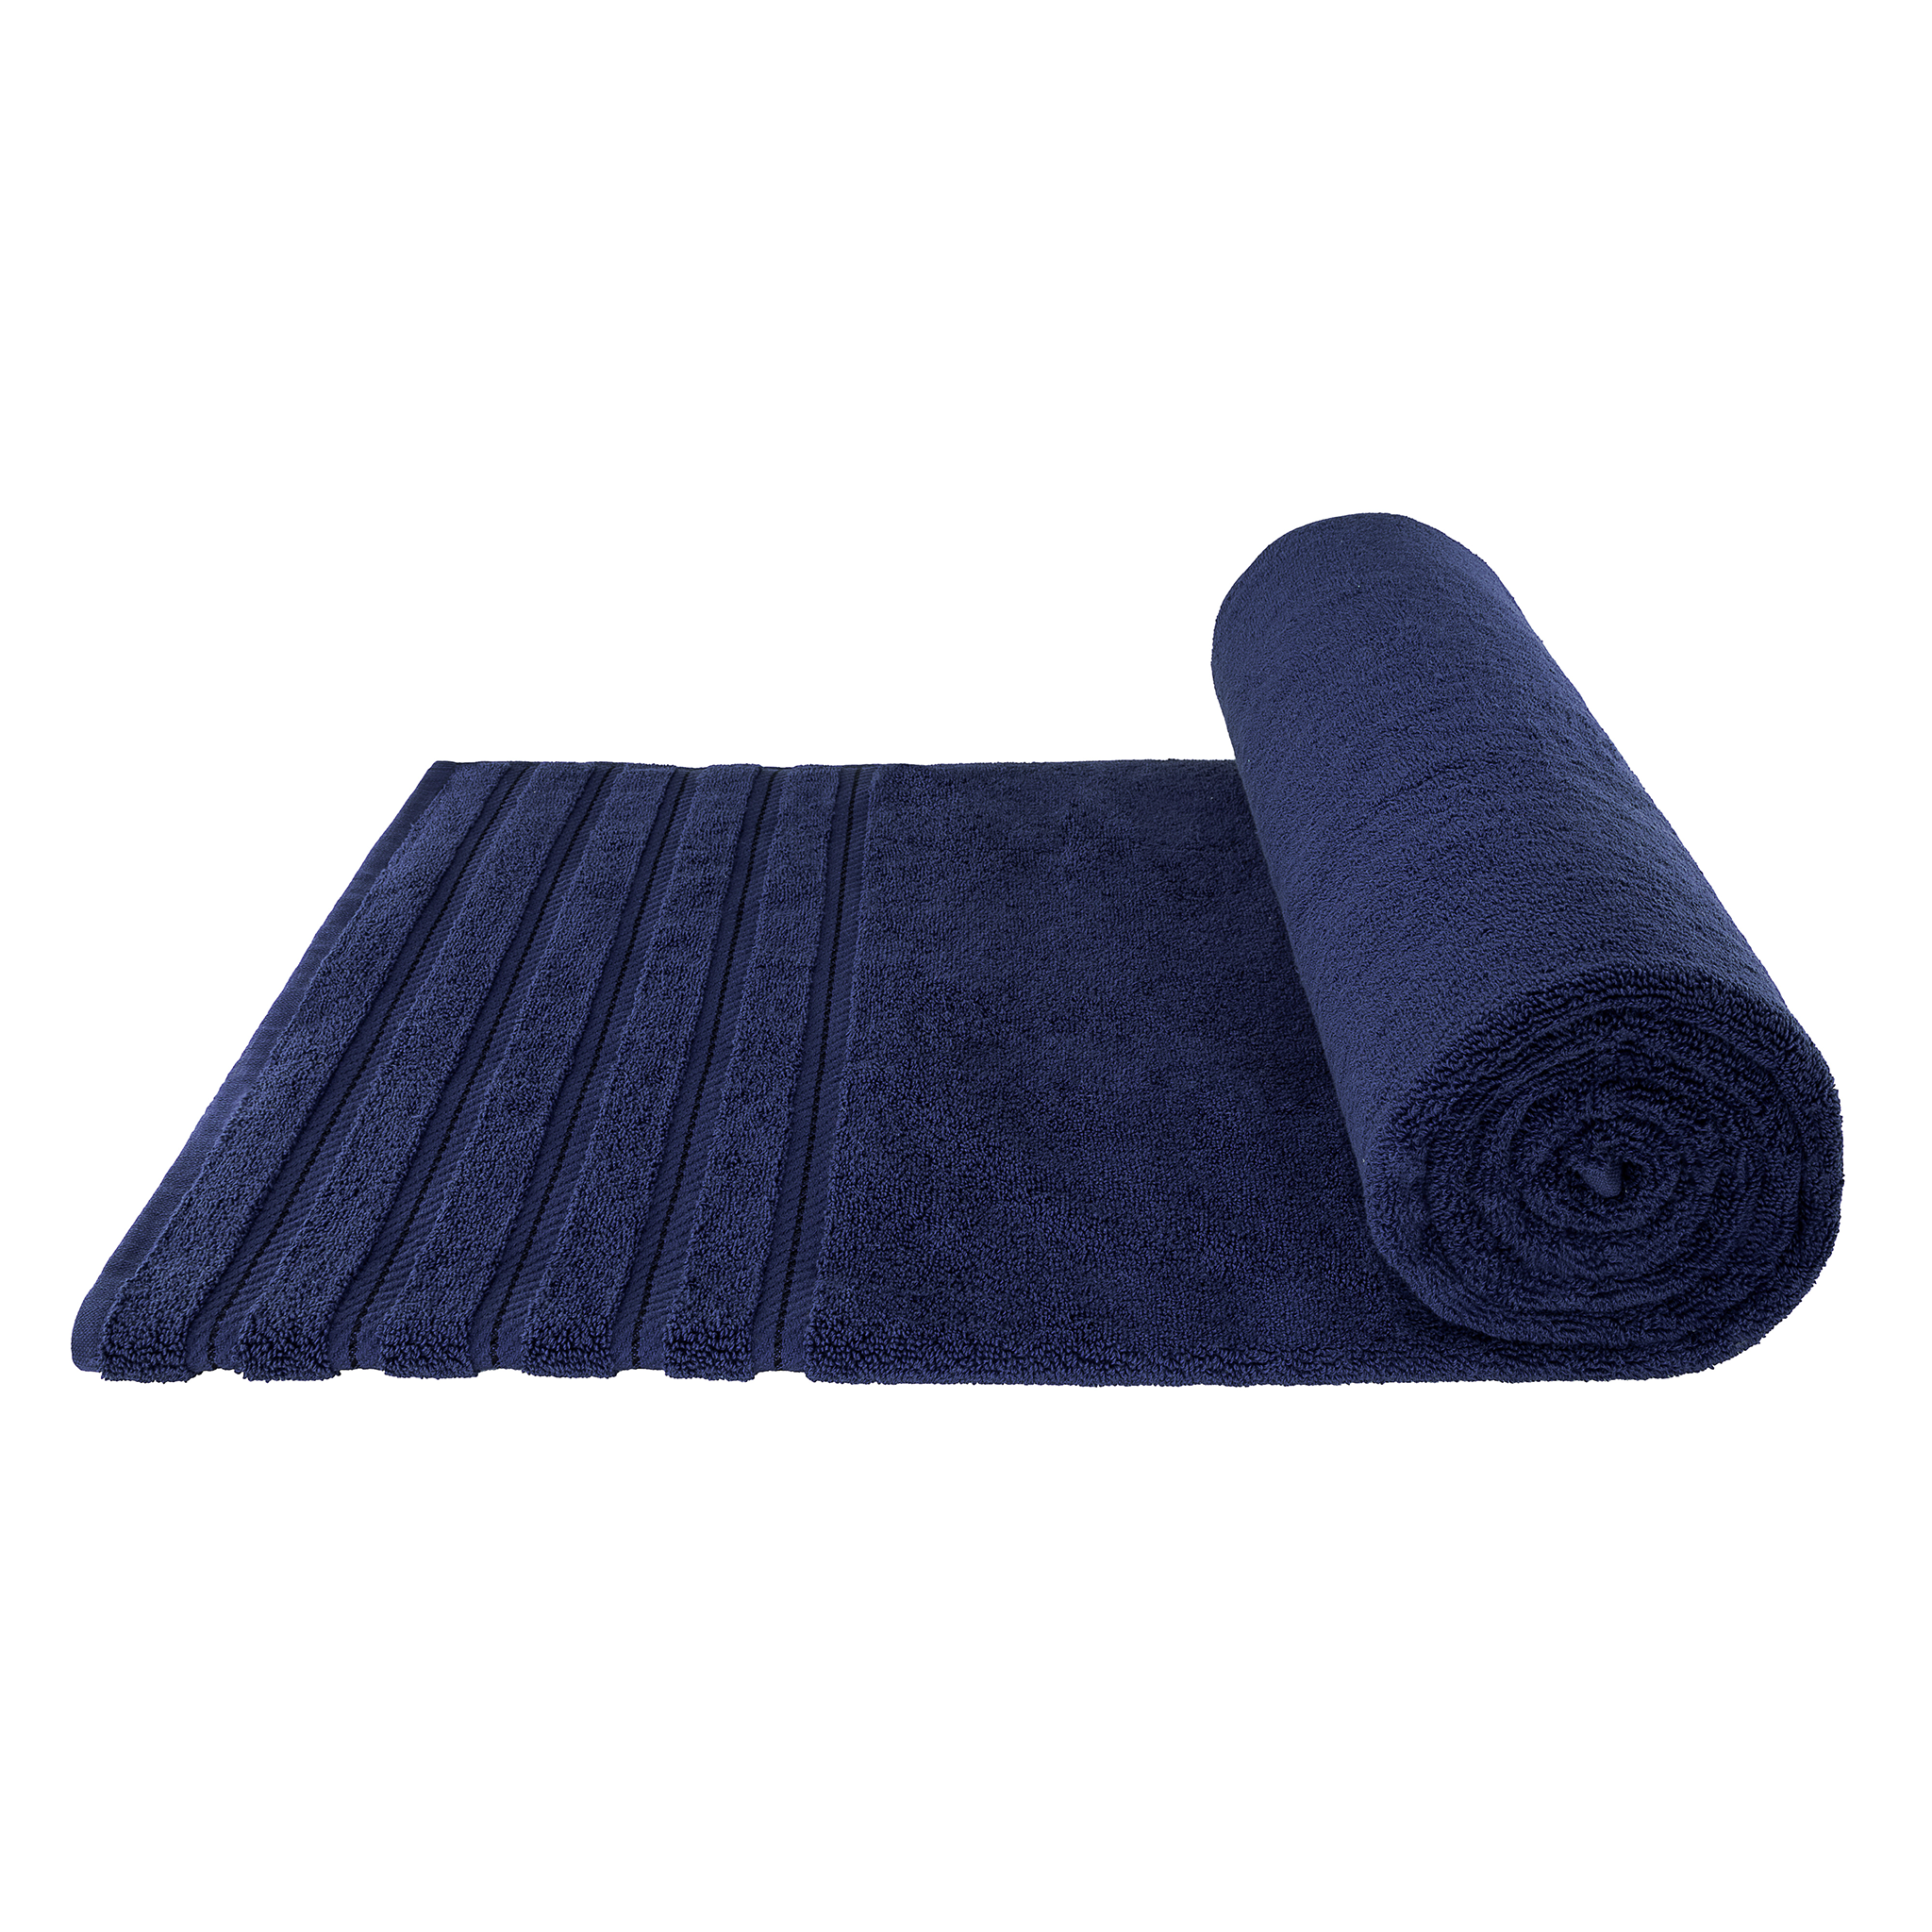 American Soft Linen - 35x70 Jumbo Bath Sheet Turkish Bath Towel - 16 Piece Case Pack - Navy-Blue - 6